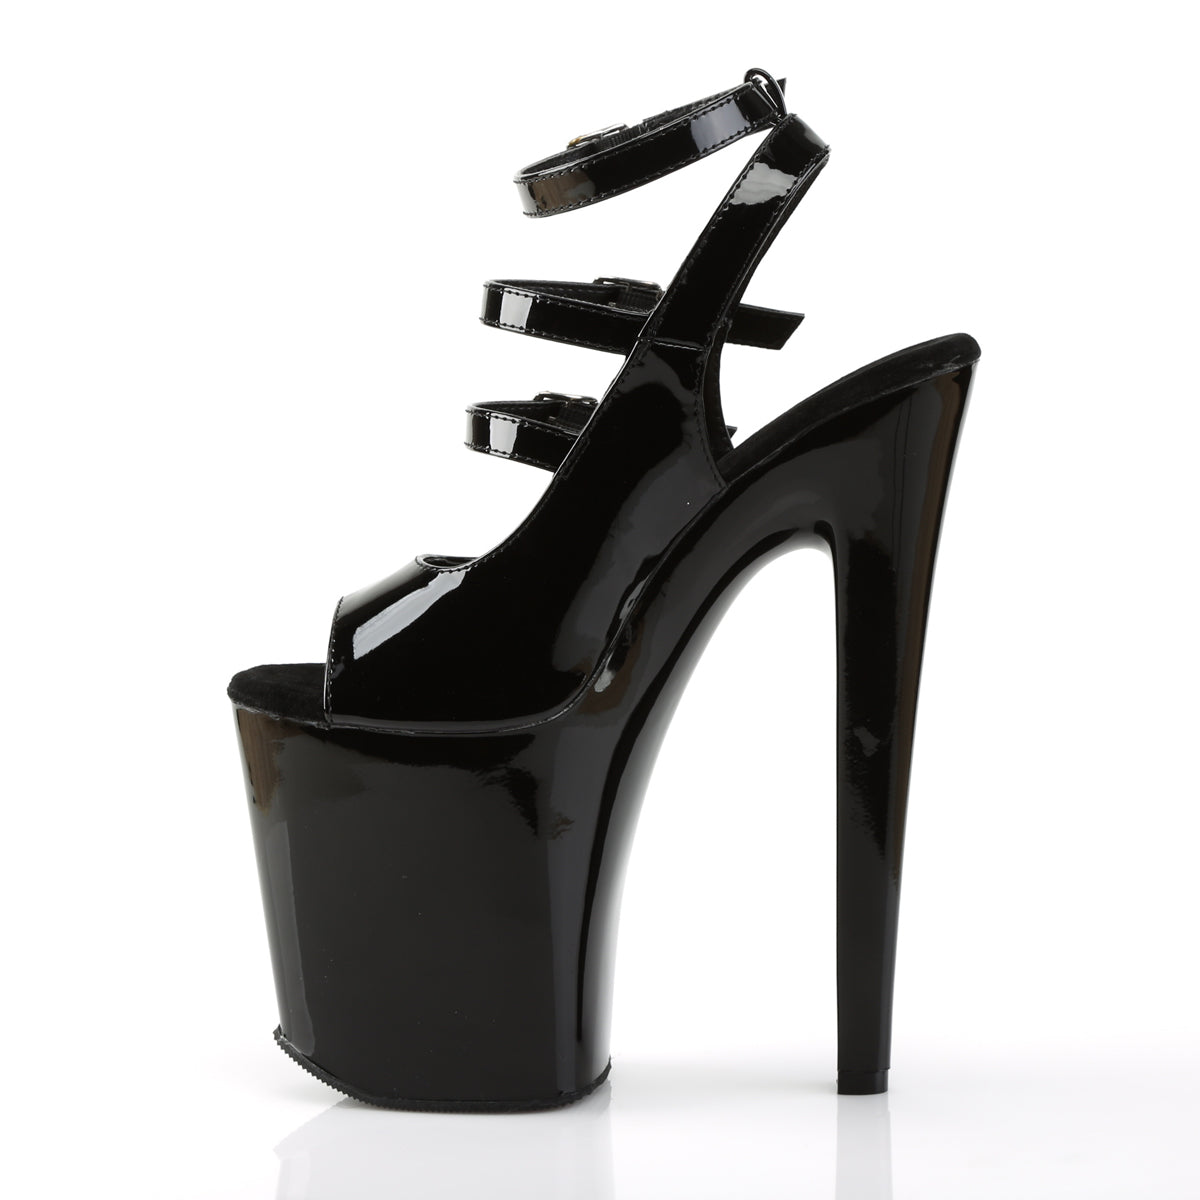 XTREME-873 8" Heel Black Patent Pole Dancing Platforms Shoes-Pleaser- Sexy Shoes Pole Dance Heels